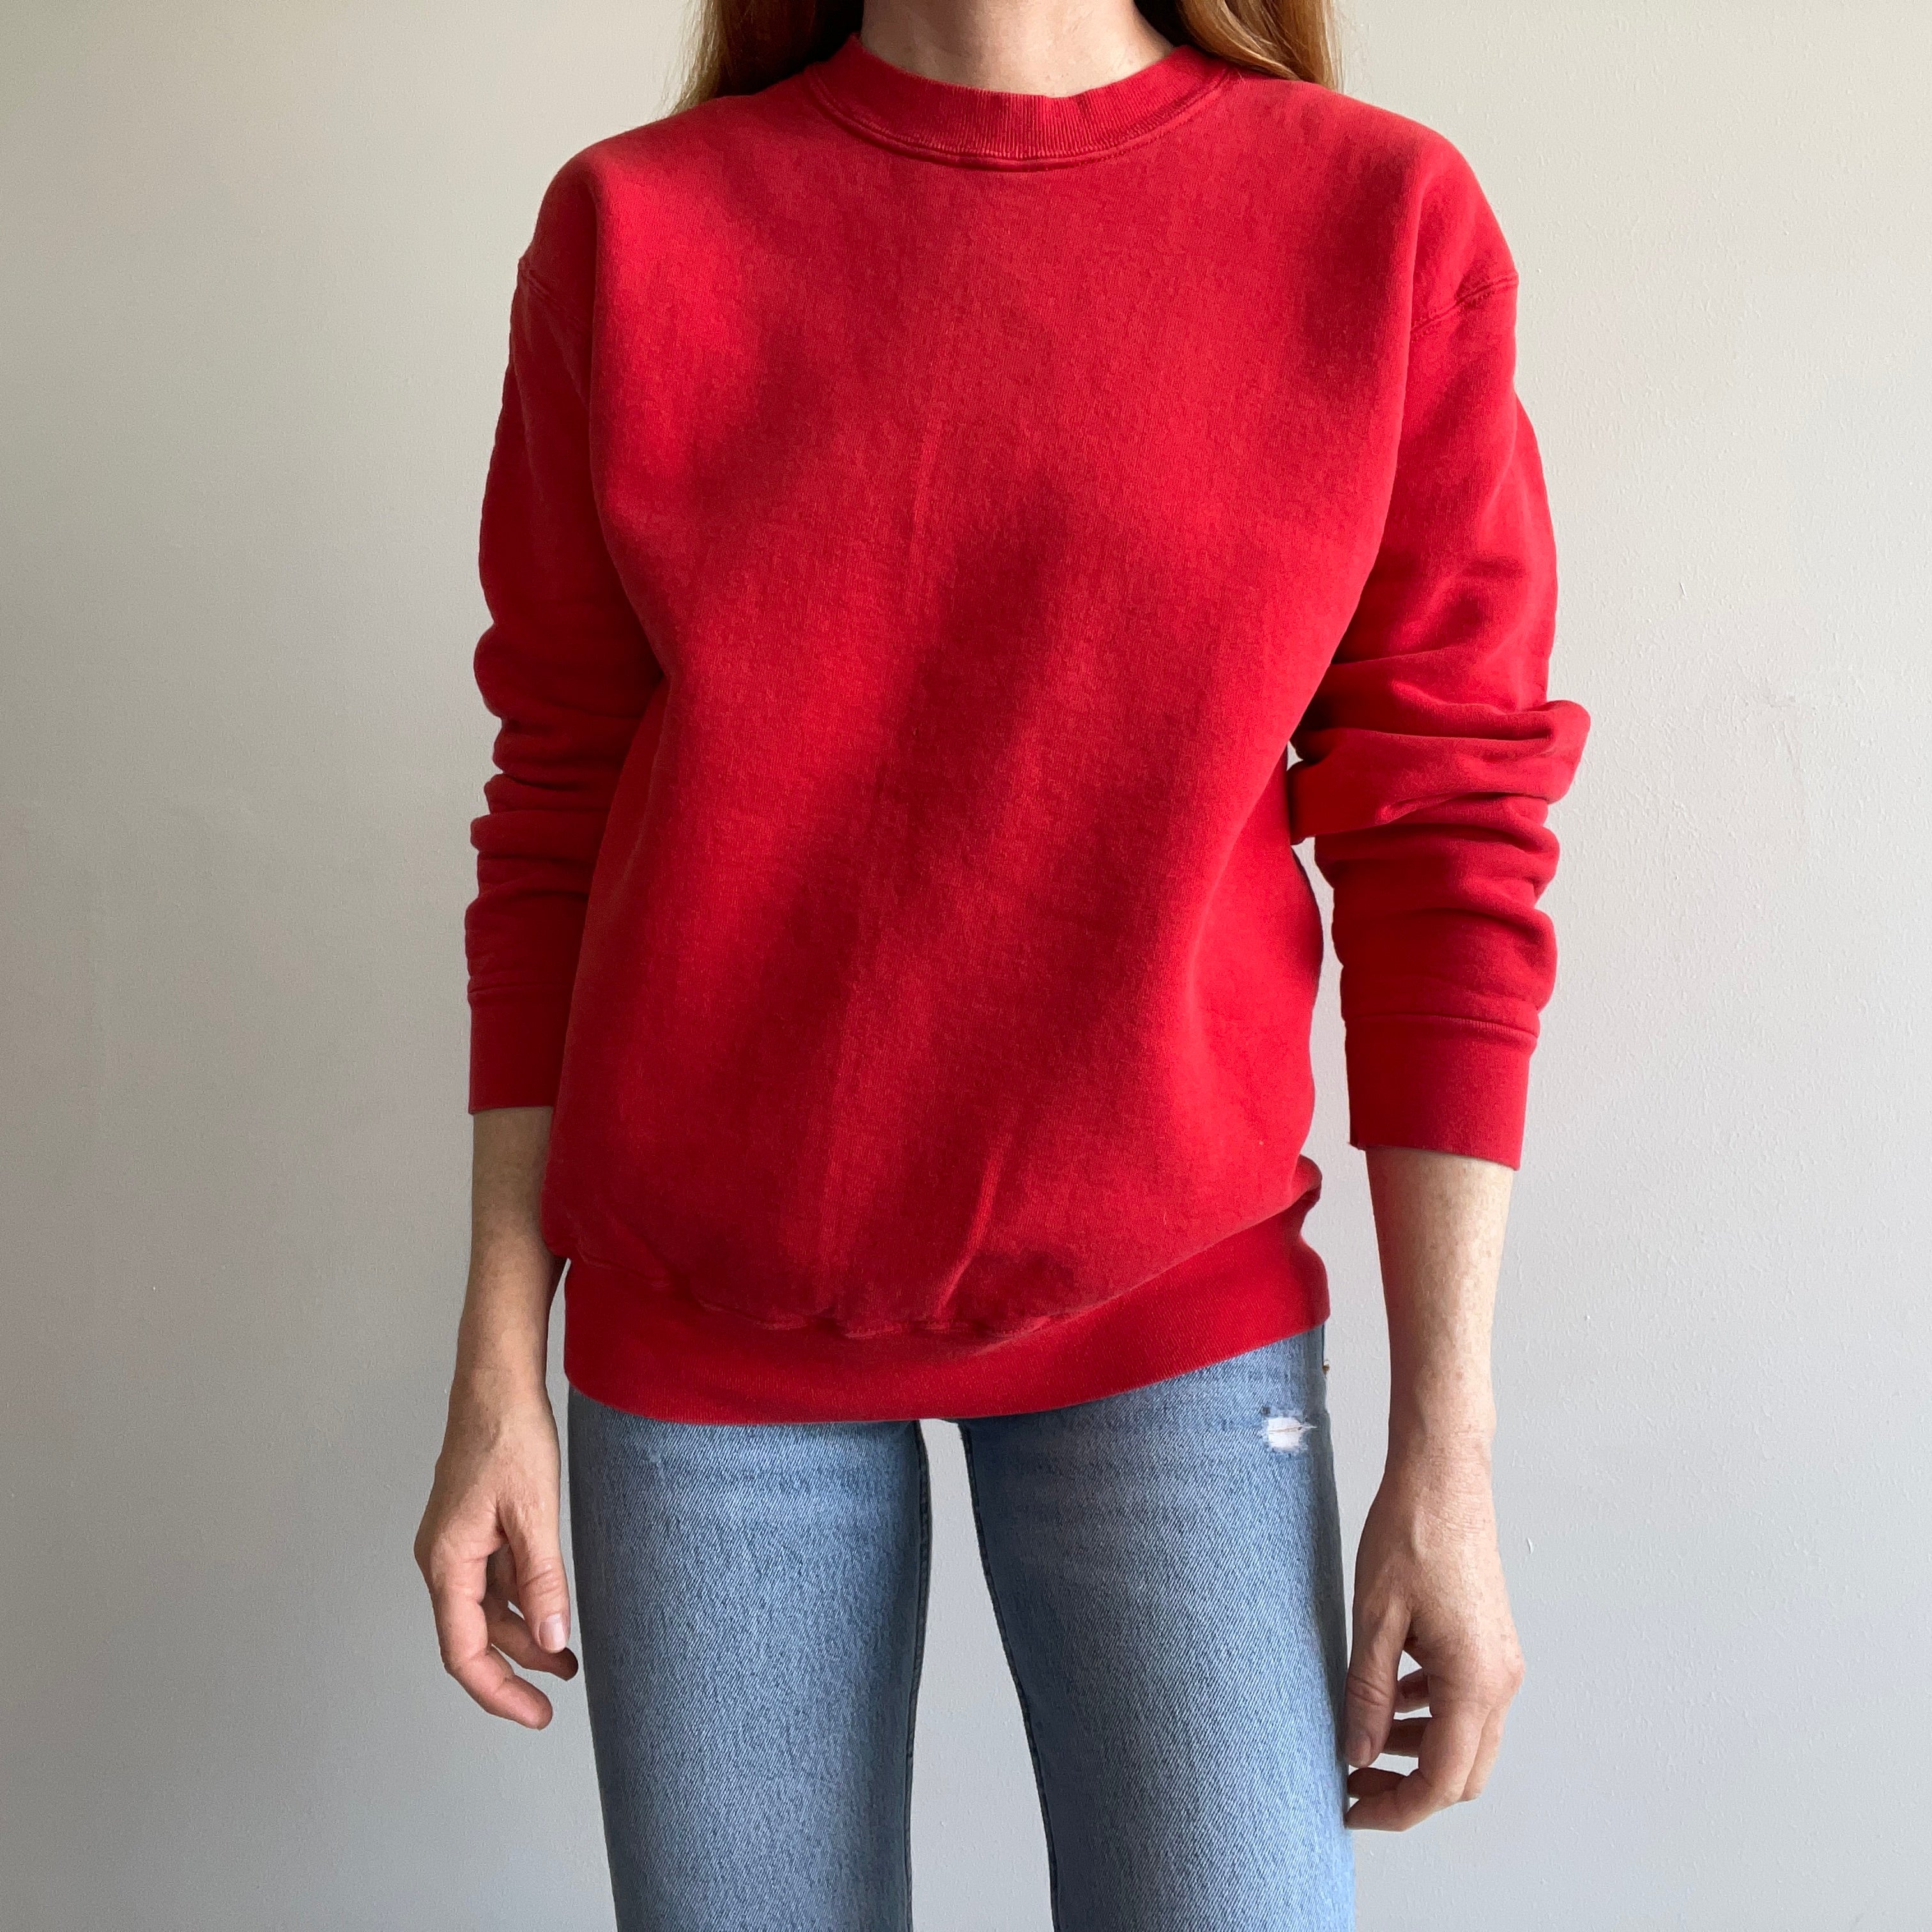 1990s Blank Red Sweatshirt by Soffee